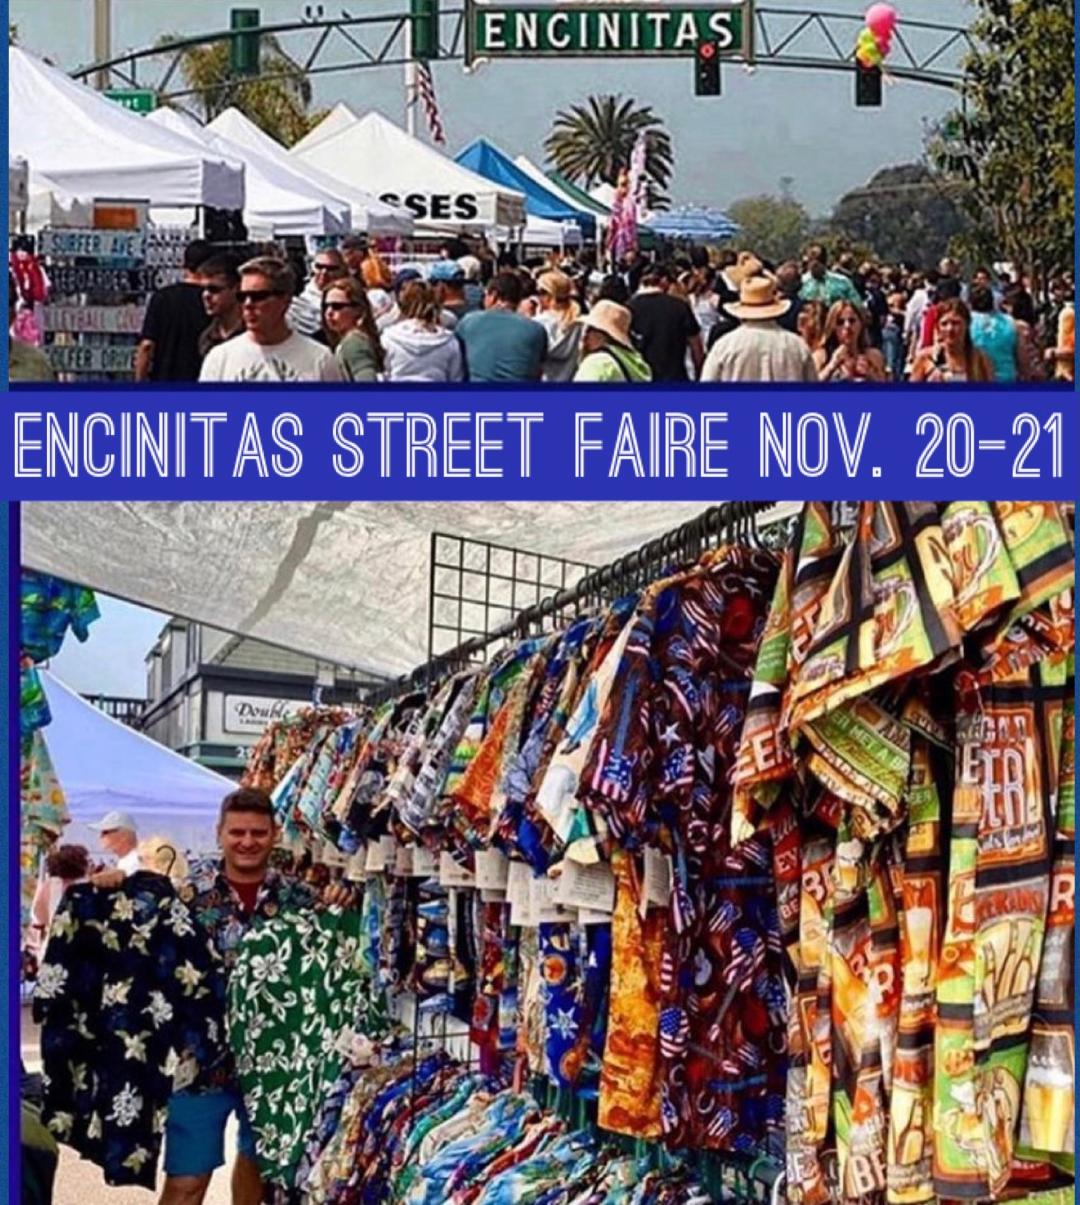 Encinitas Street Faire Nov. 20th and 21st 2021